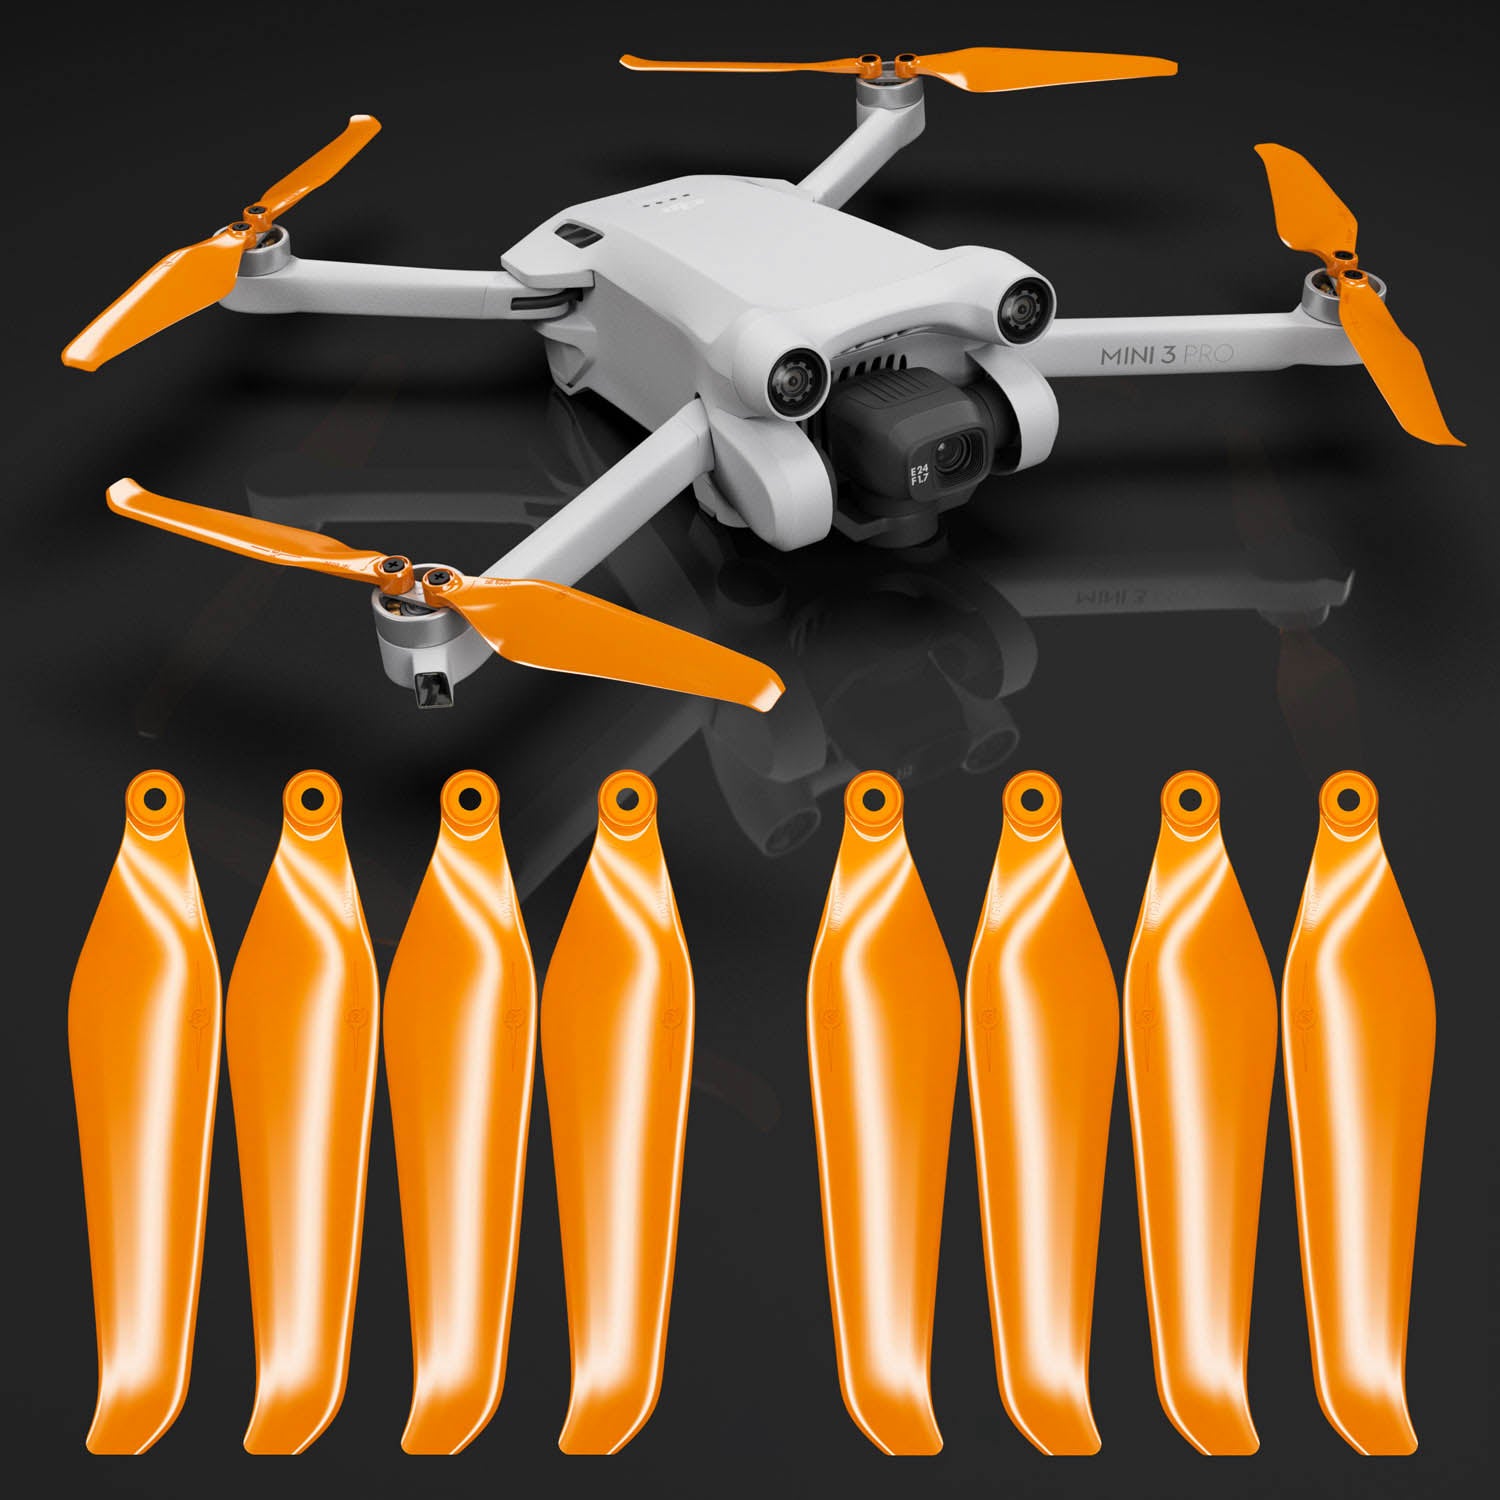 DJI Mini 3 Pro / 4 Pro STEALTH Upgrade Propellers - x4 Orange